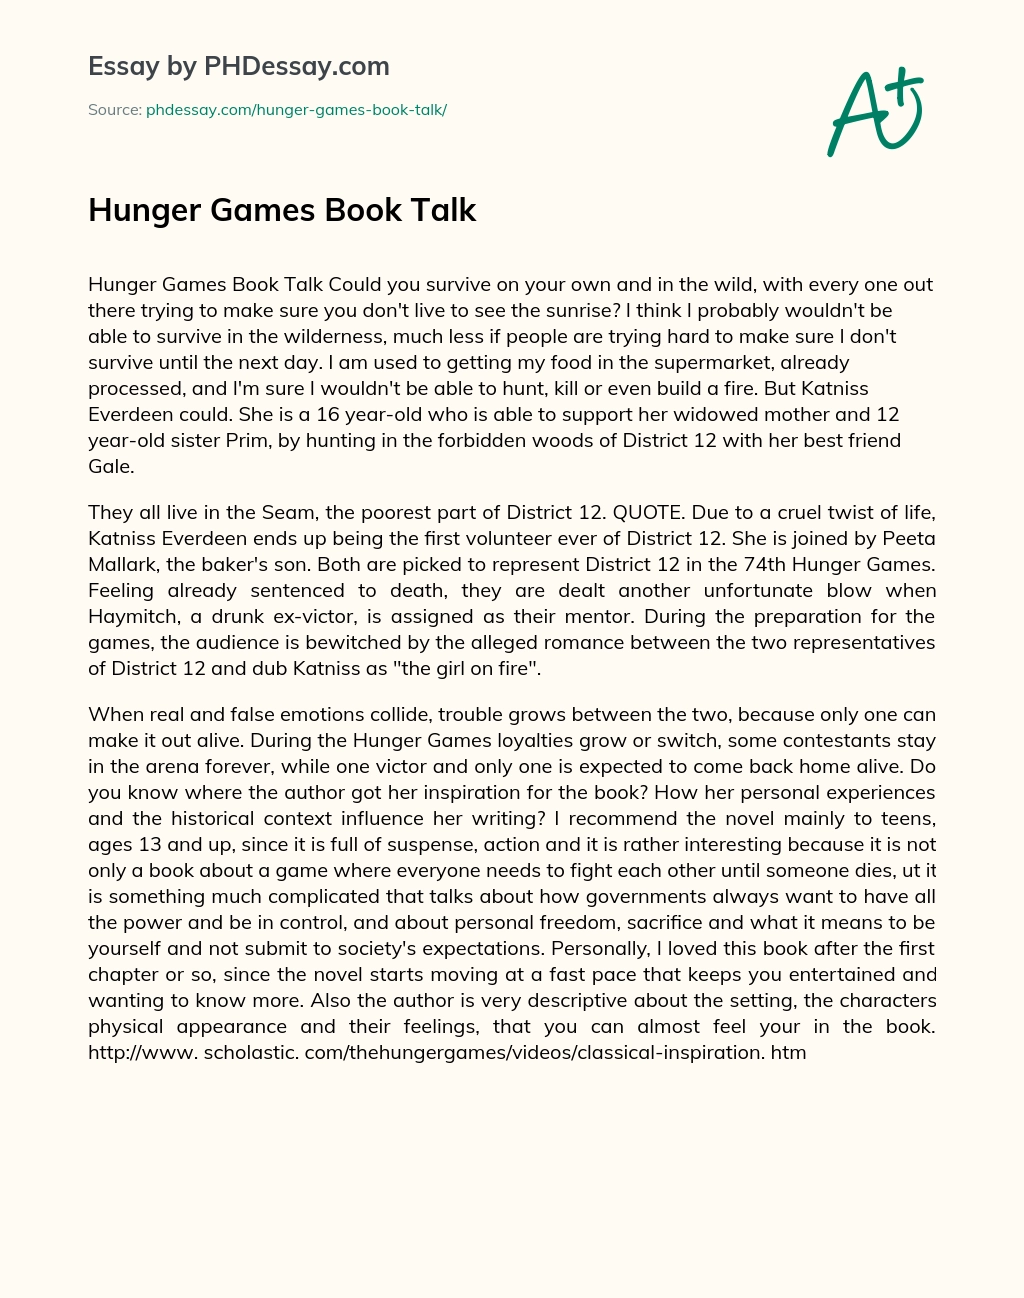 Hunger Games Book Talk essay